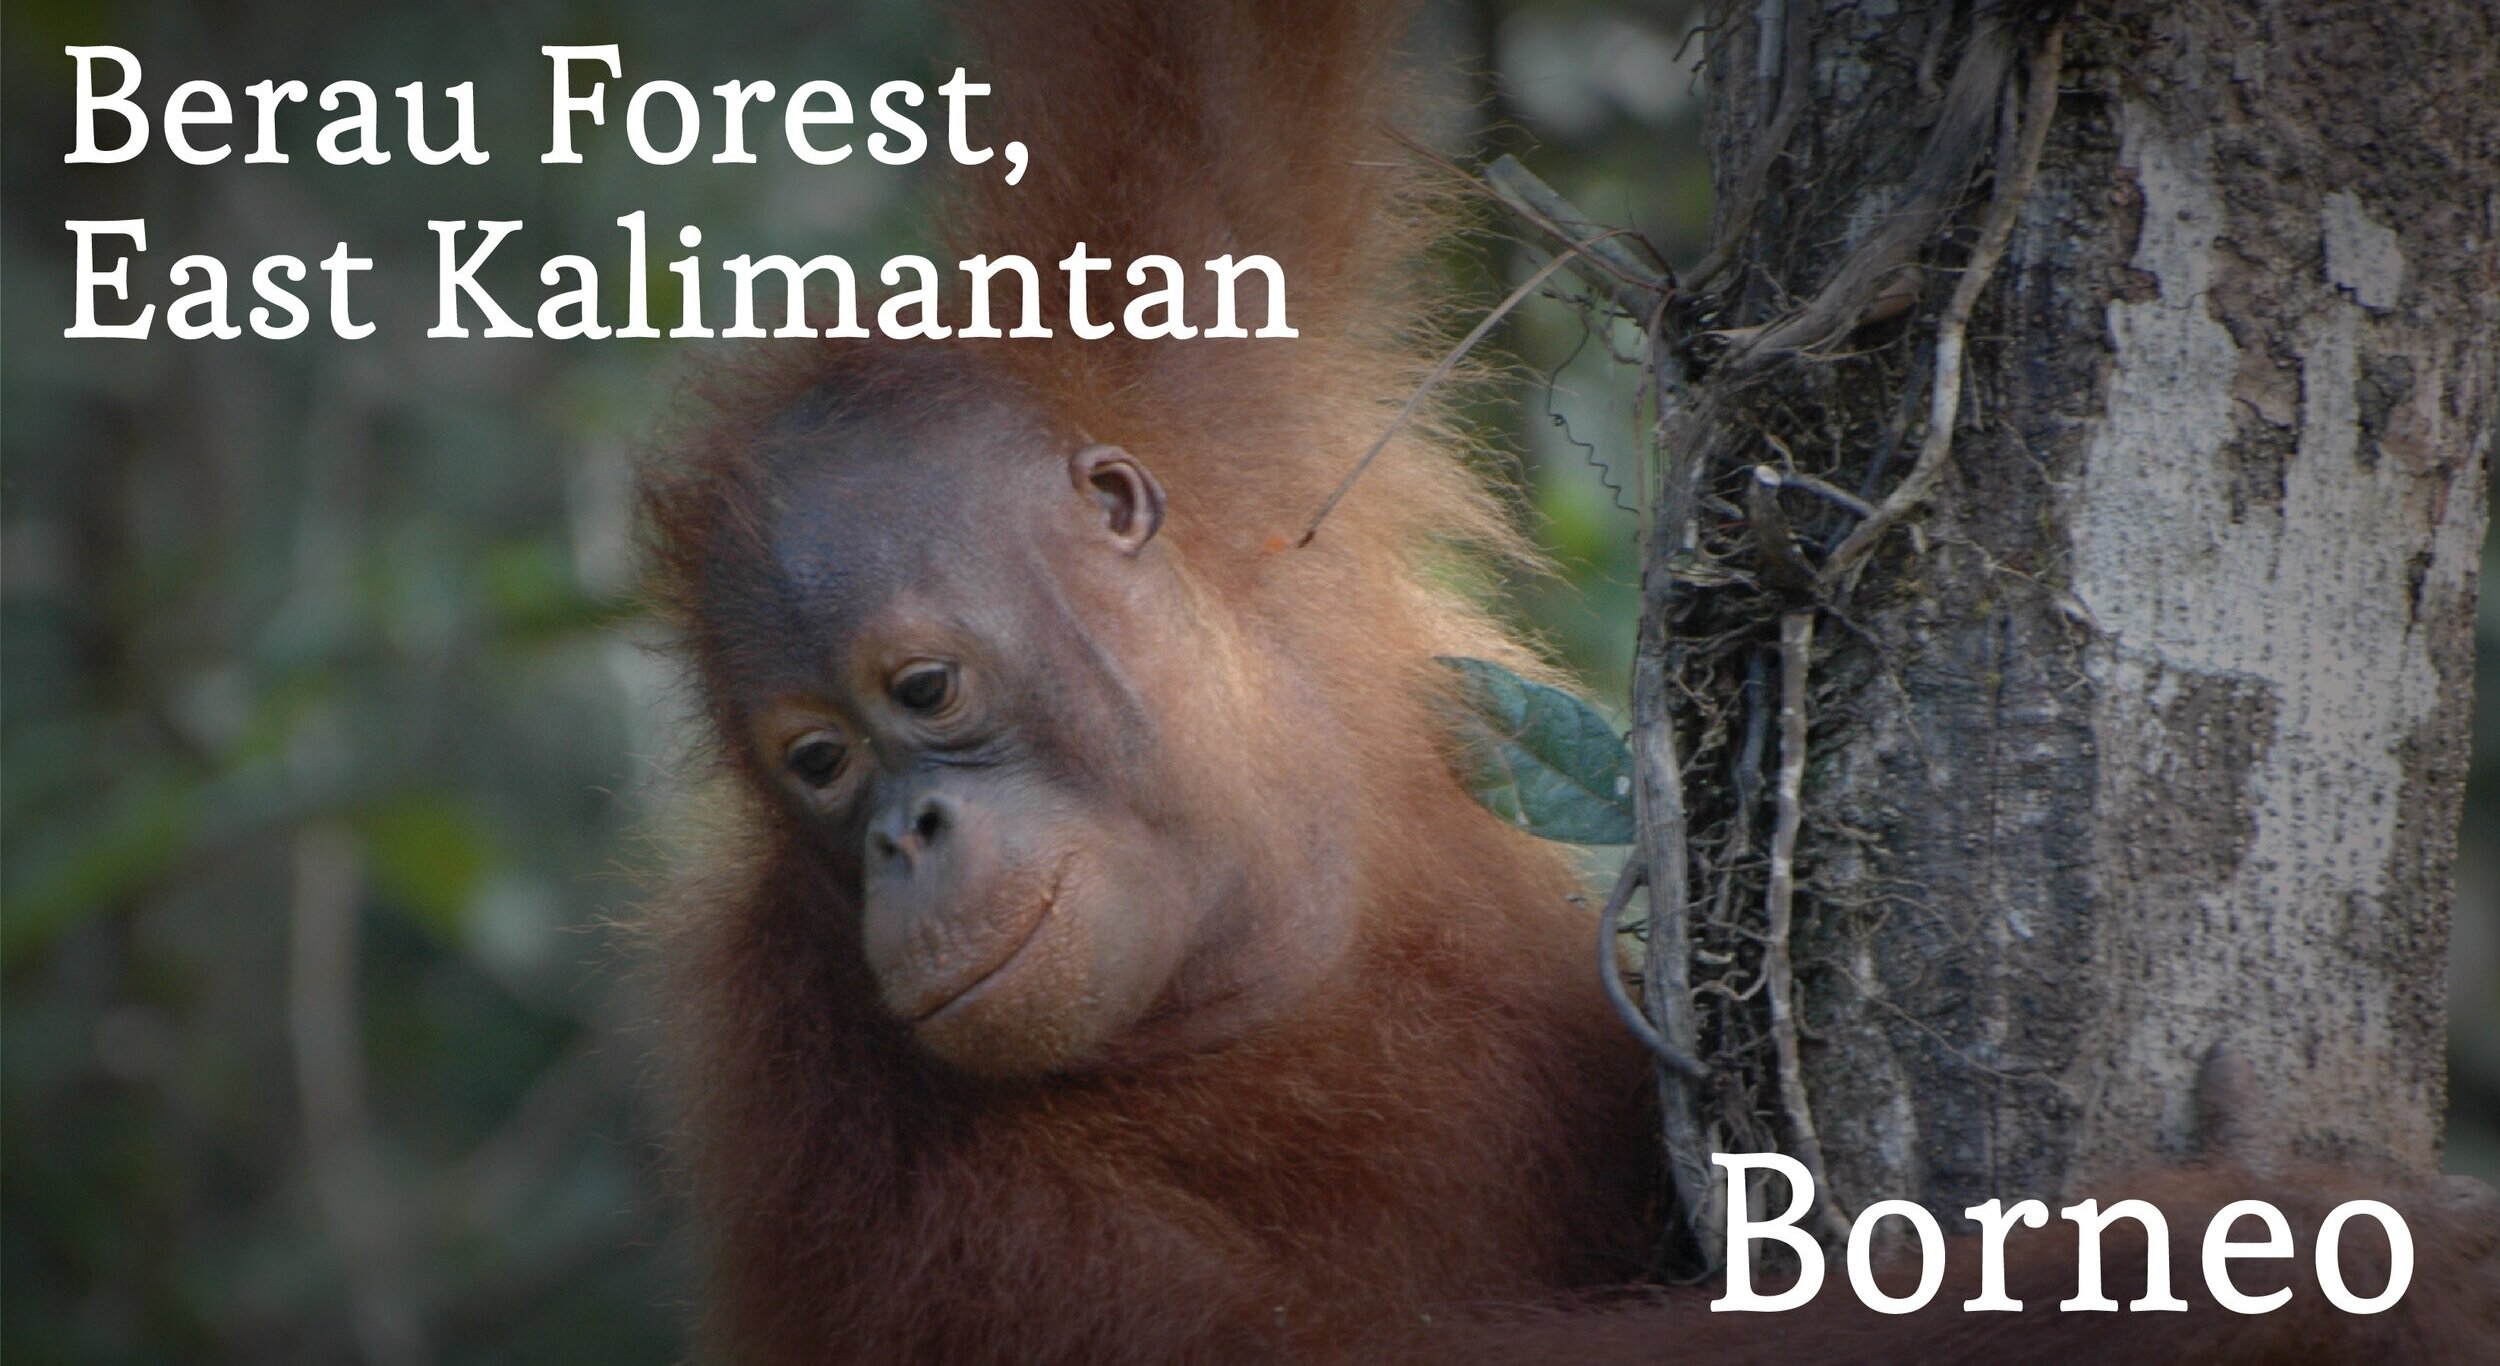 Berau Forest, East Kalimantan, Borneo, adoption portal